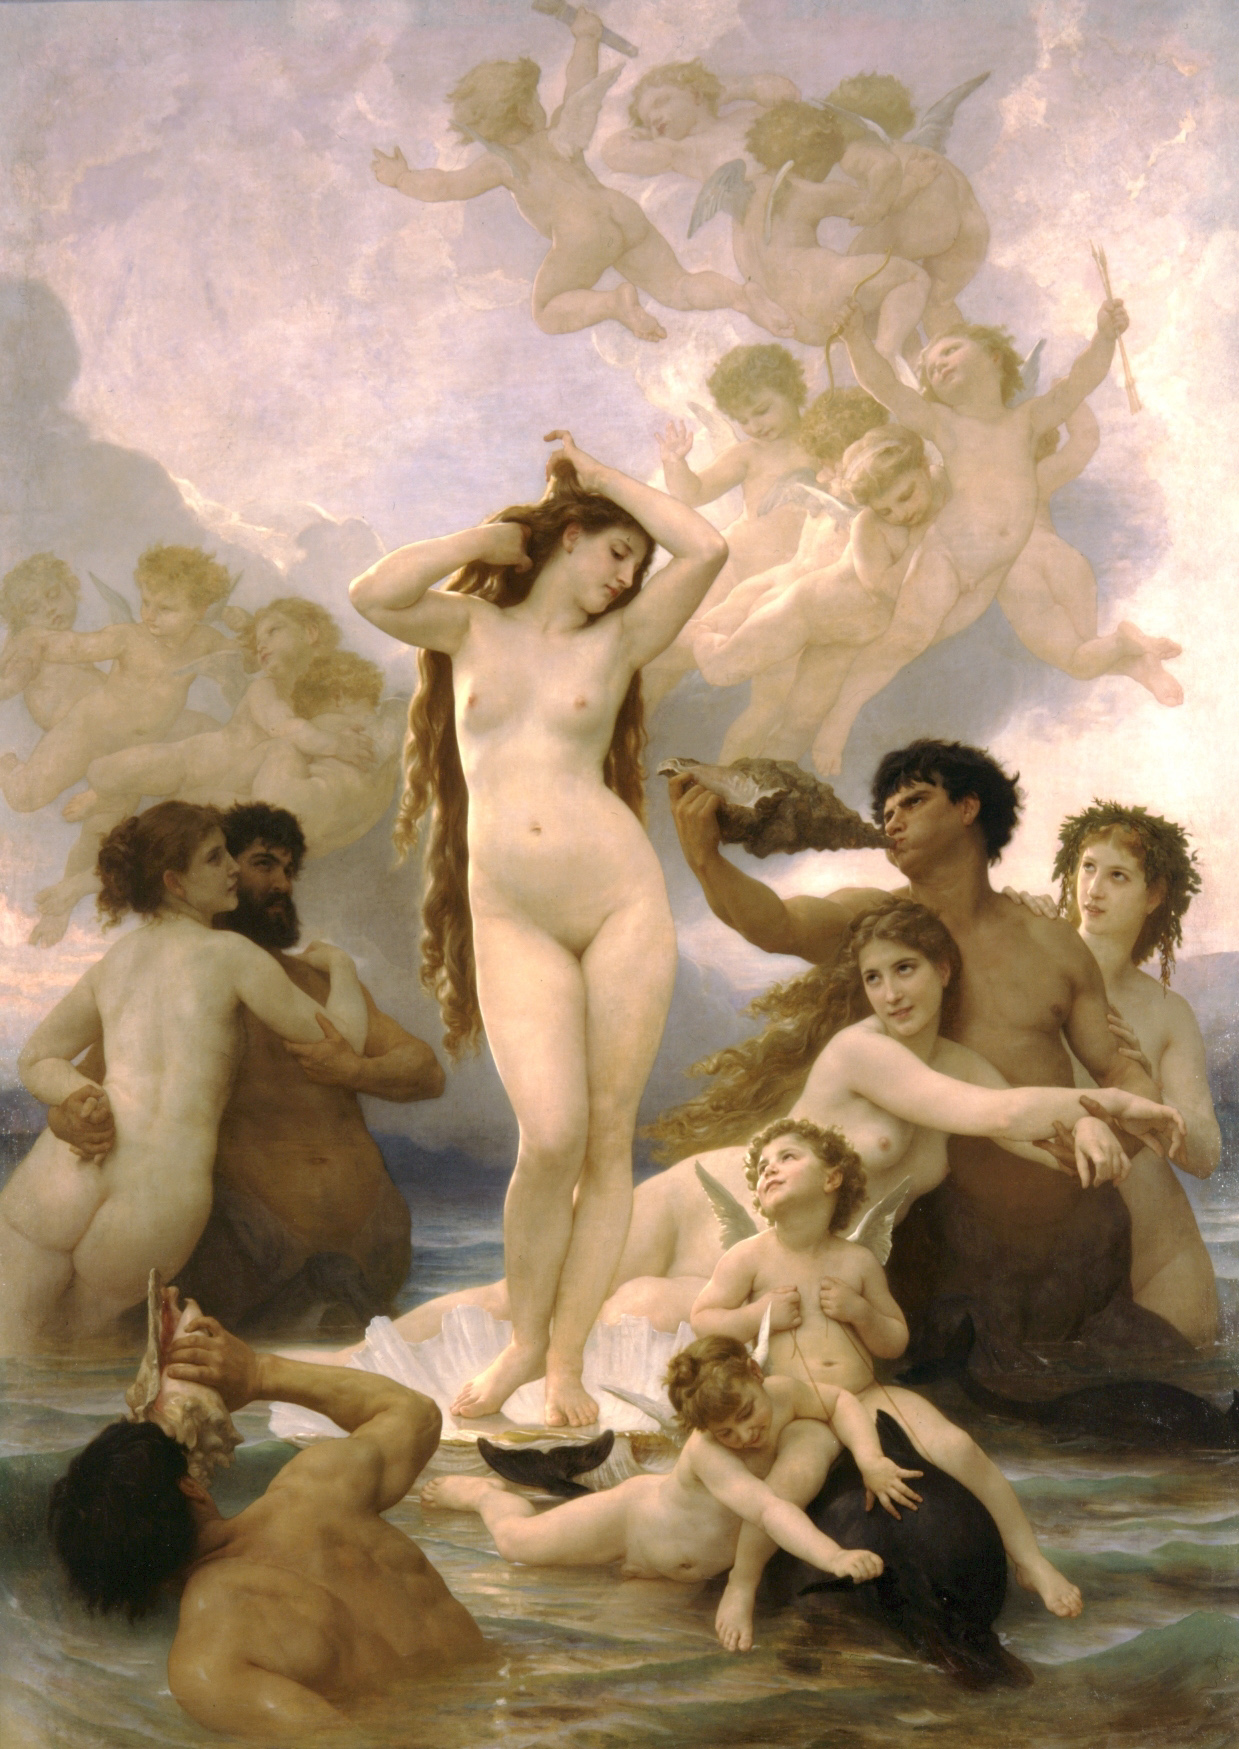 William-Adolphe_Bouguereau_(1825-1905)_-_The_Birth_of_Venus_(1879)